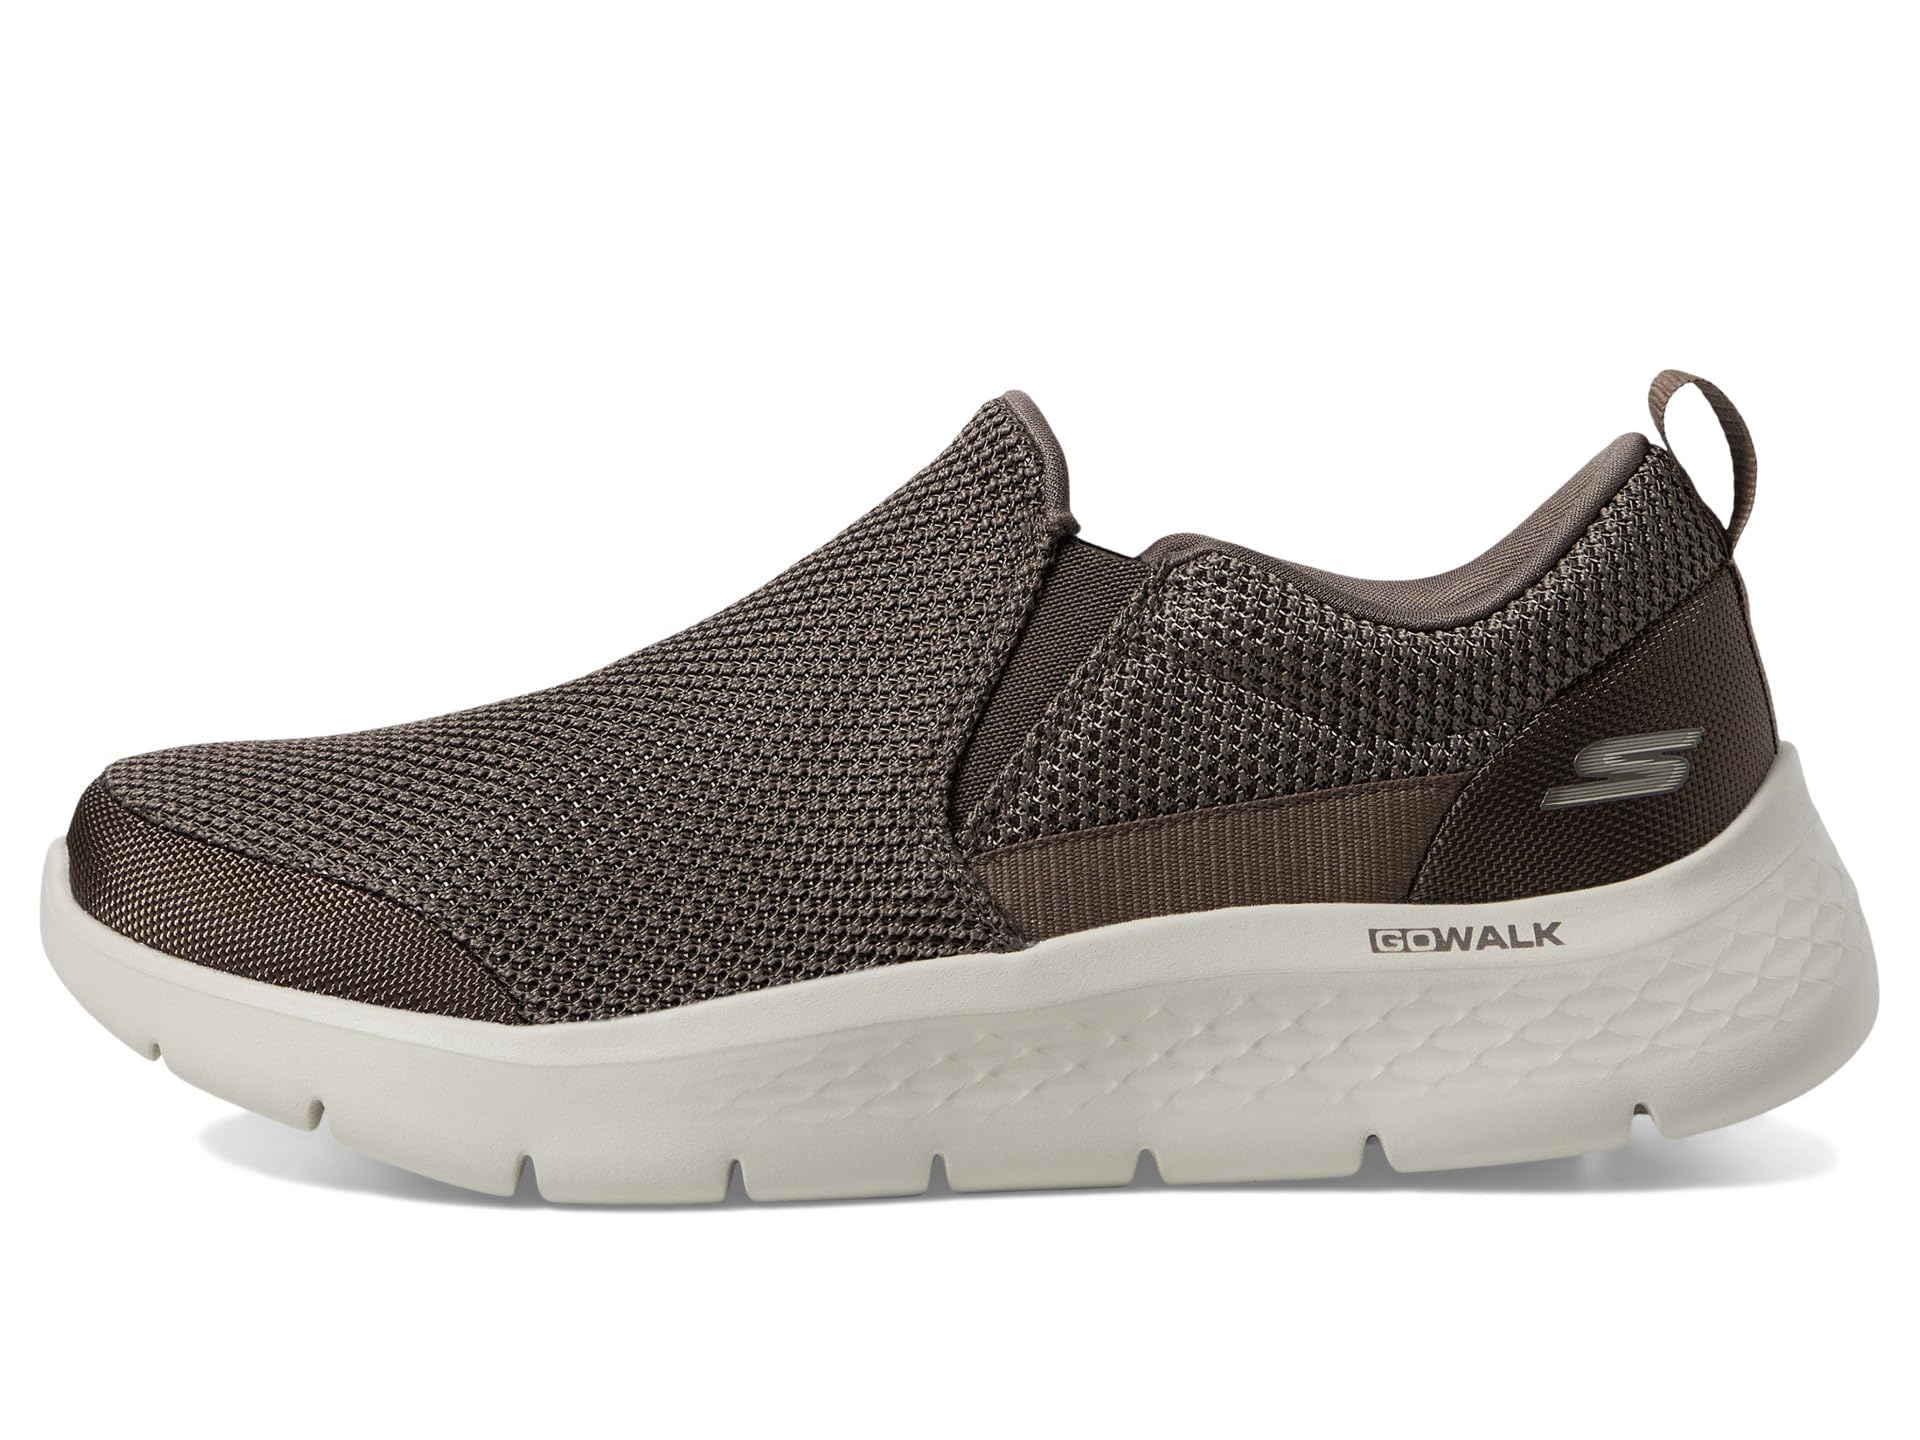 Skechers Men's Gowalk Flex-Athletic Slip-on Casual Loafer Walking Shoes with Air Cooled Foam Sneaker